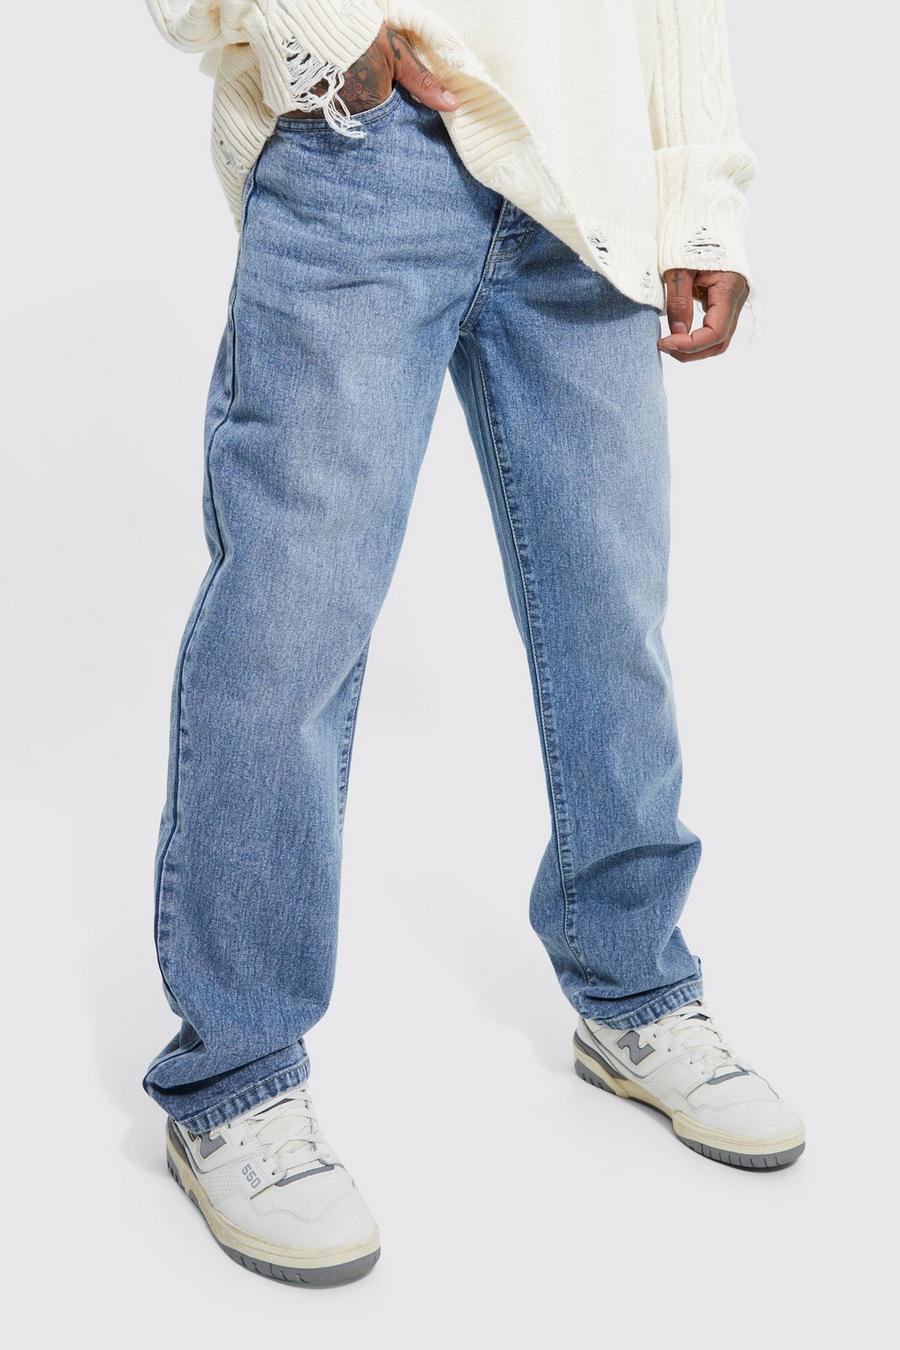 https://media.boohoo.com/i/boohoo/bmm41417_light%20blue_xl/male-light%20blue-relaxed-fit-jeans/?w=900&qlt=default&fmt.jp2.qlt=70&fmt=auto&sm=fit